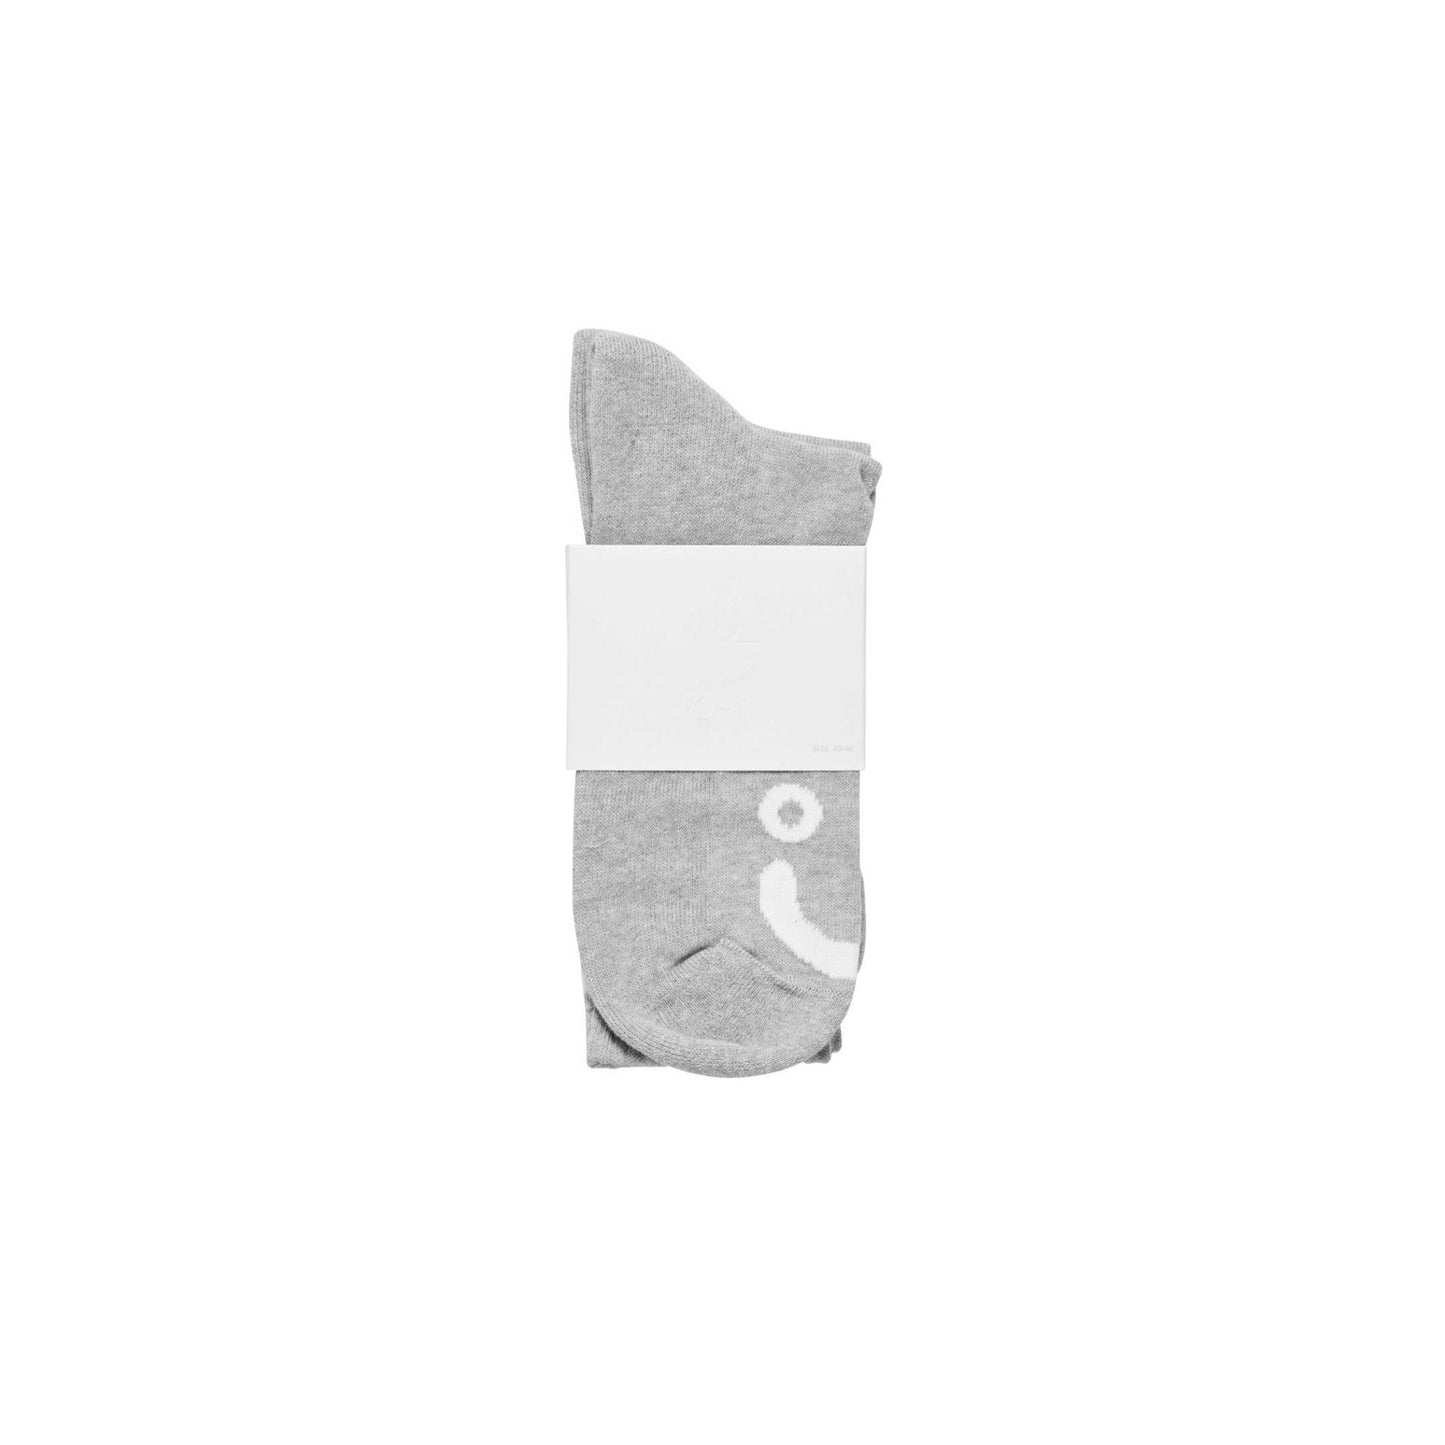 Polar Happy Sad socks, heather grey, heather grey - Tiki Room Skateboards - 2